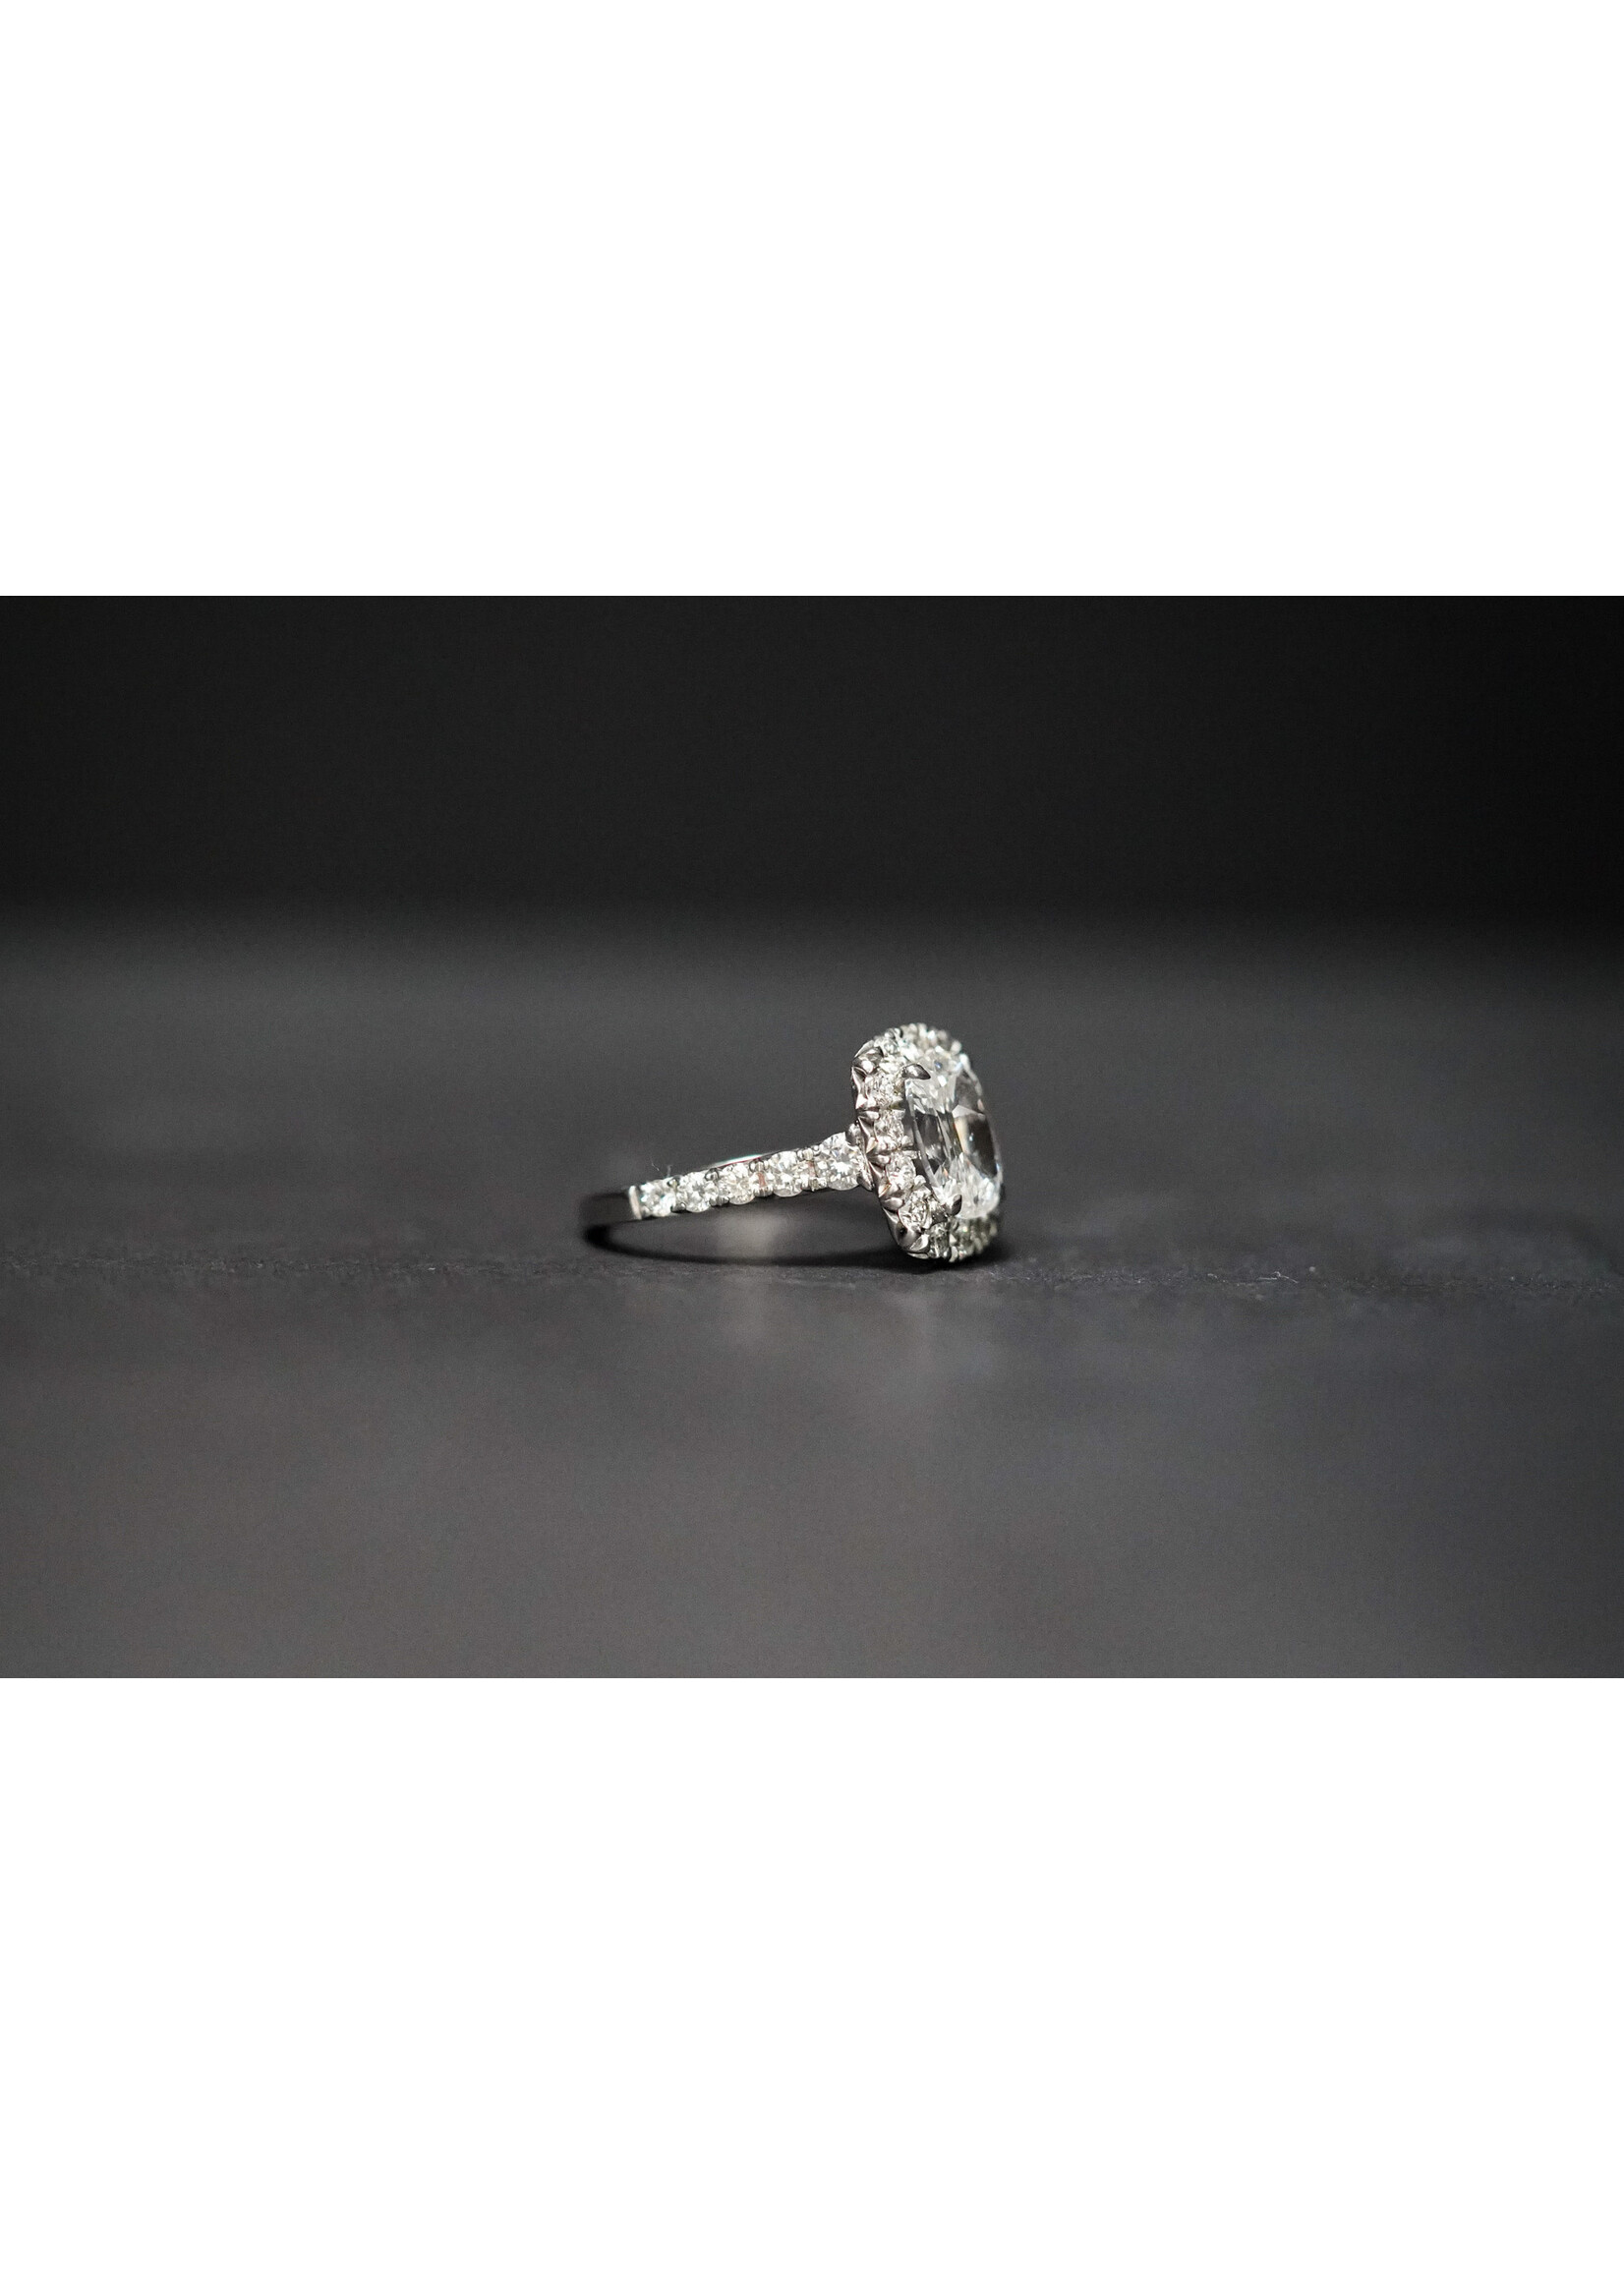 18KW 7.26g 2.72ctw (1.72ctr) E/SI1 GIA Cushion Diamond Halo Engagement Ring (size 6)